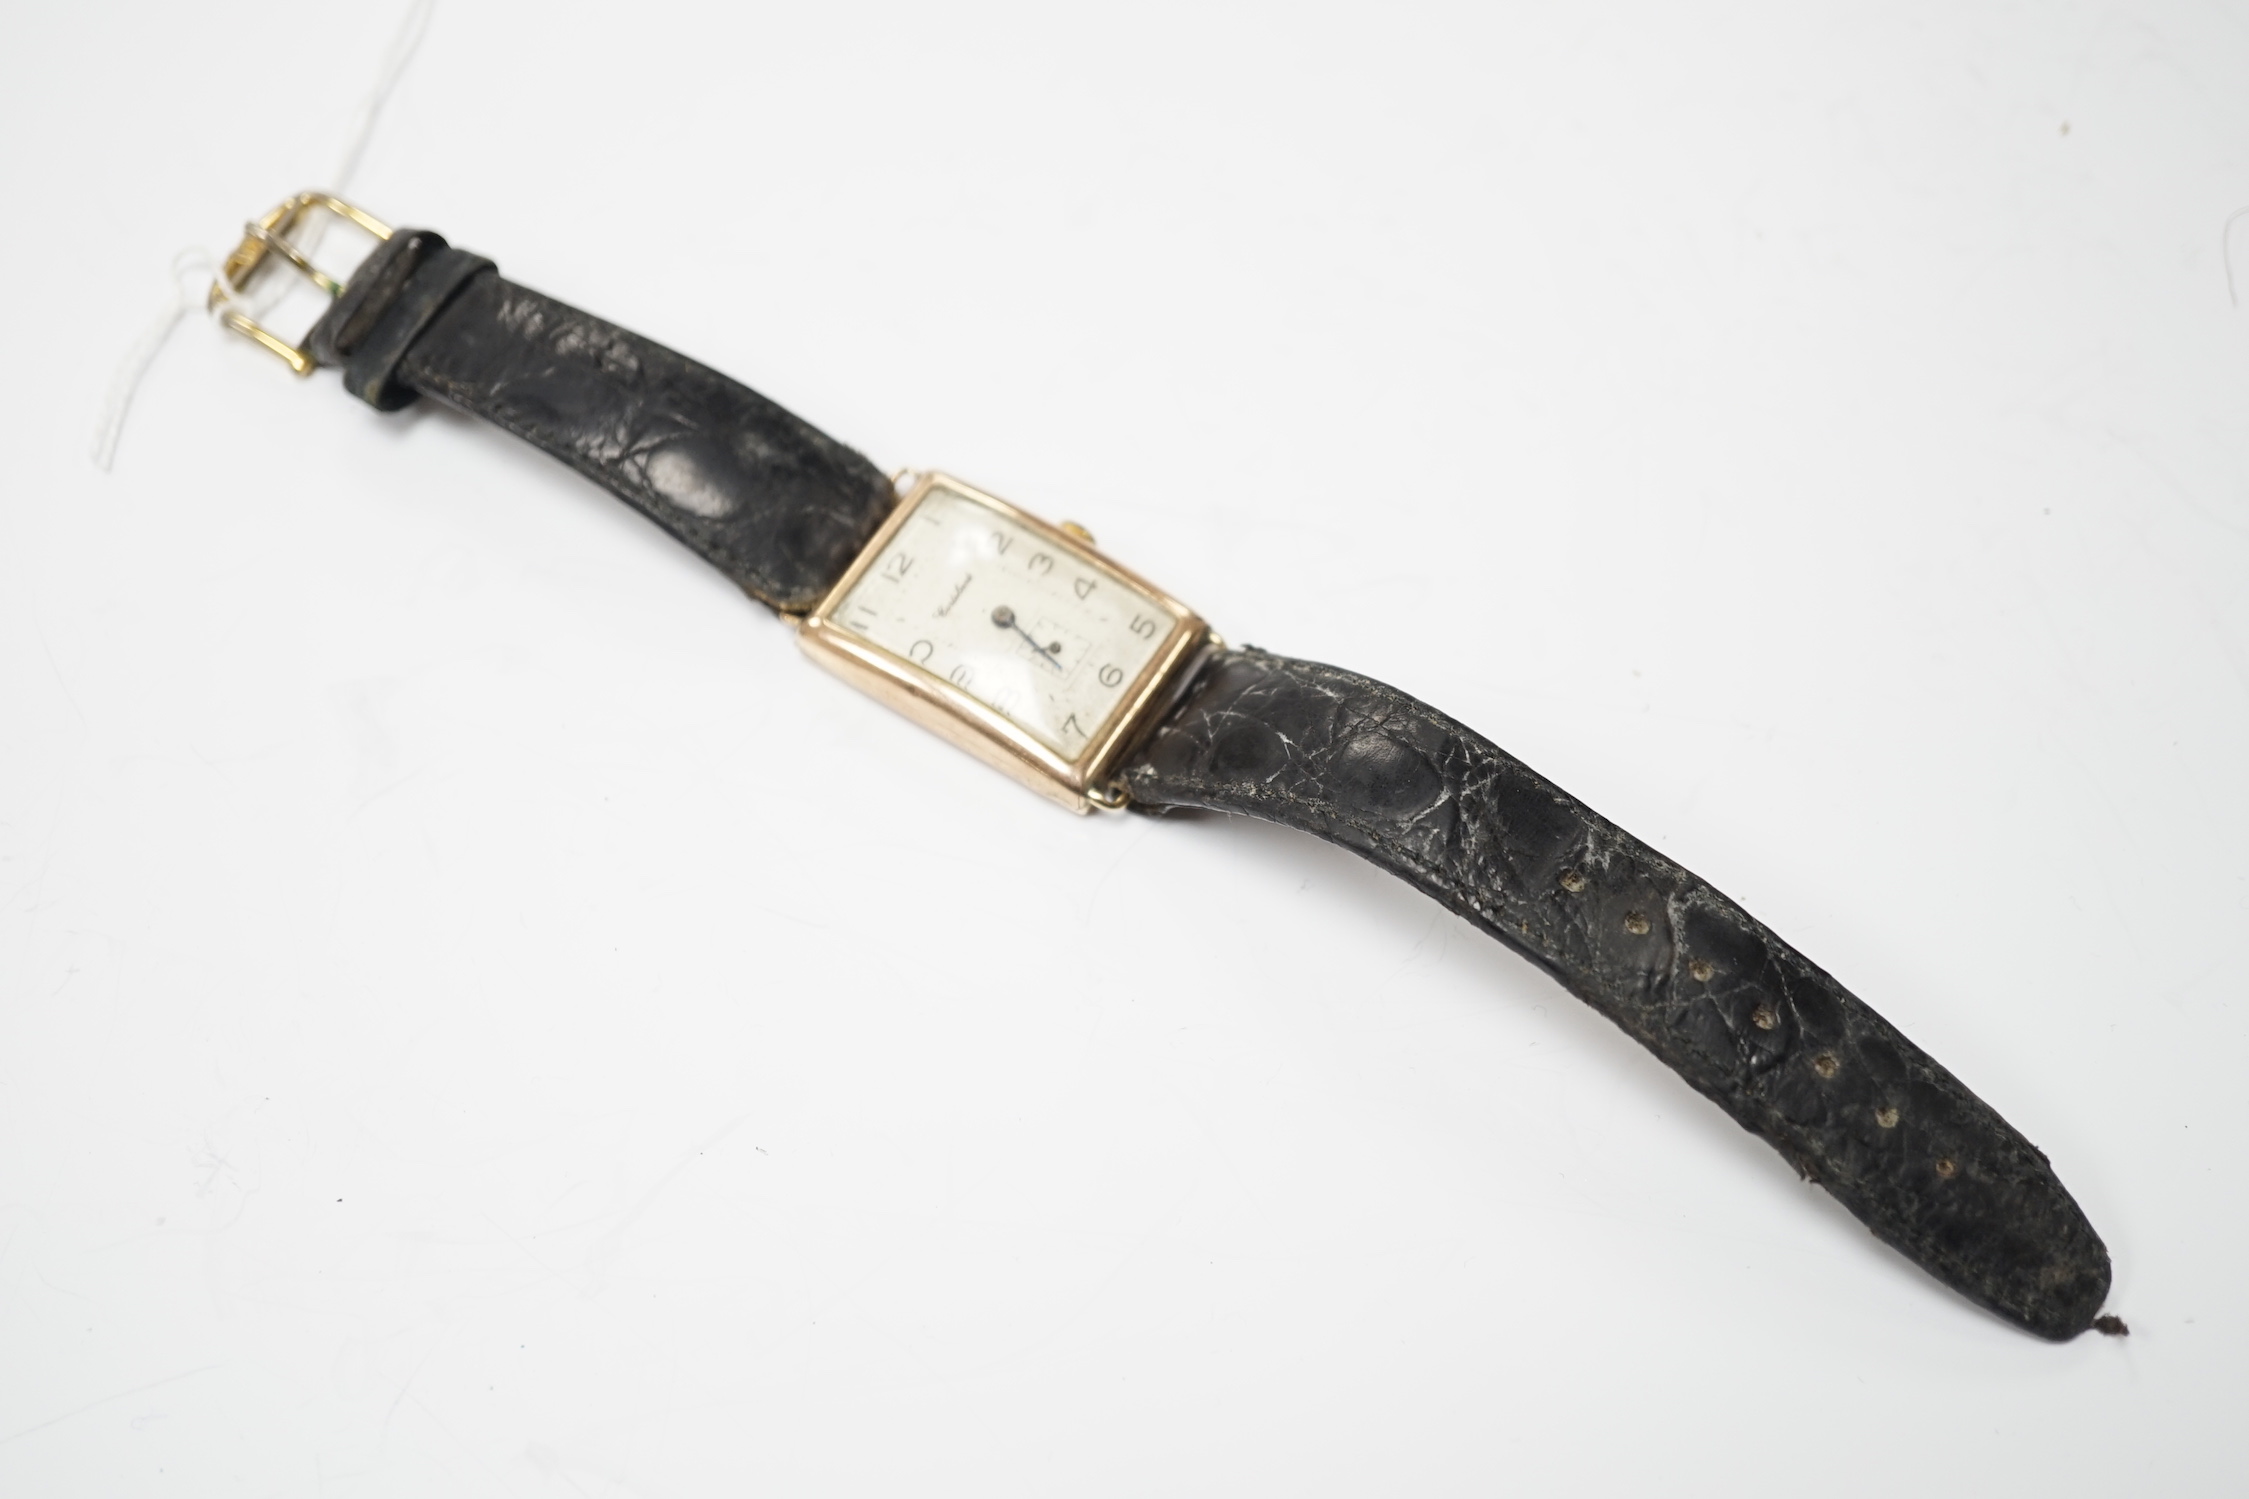 A gentleman's 1930's 9ct gold Cortebert manual wind rectangular dial wrist watch, on a leather strap.